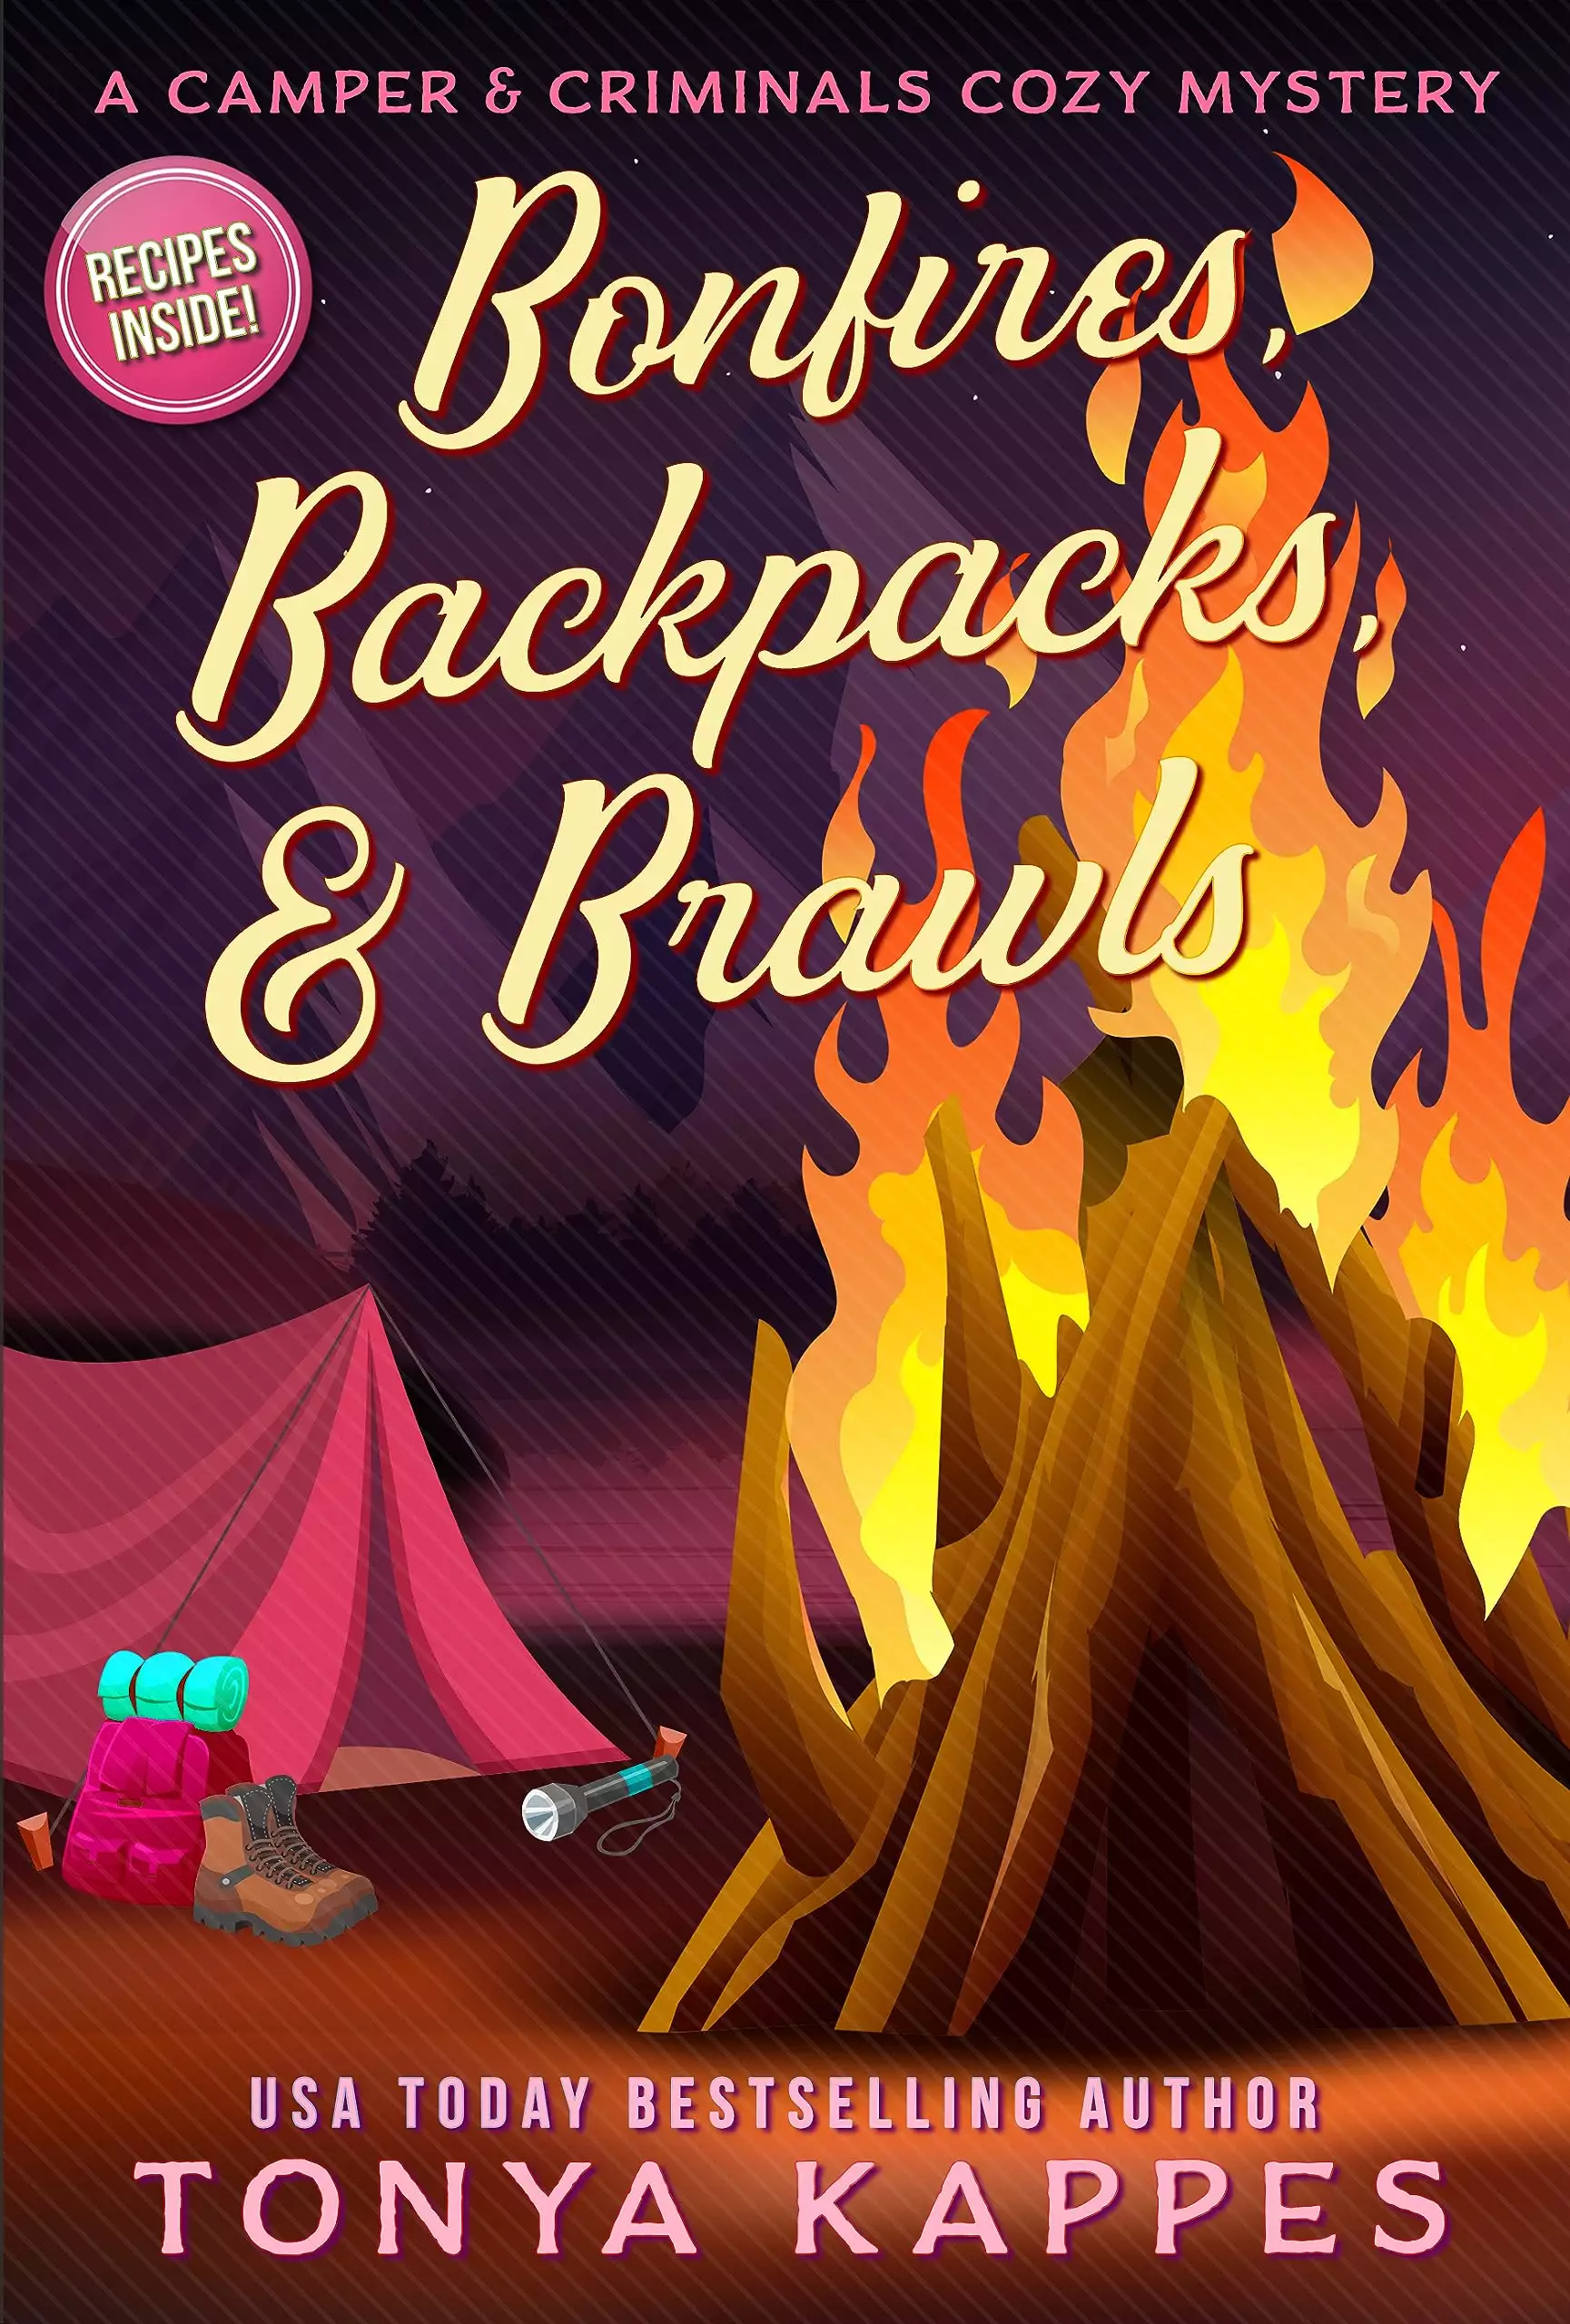 Bonfires, Backpacks, & Brawls